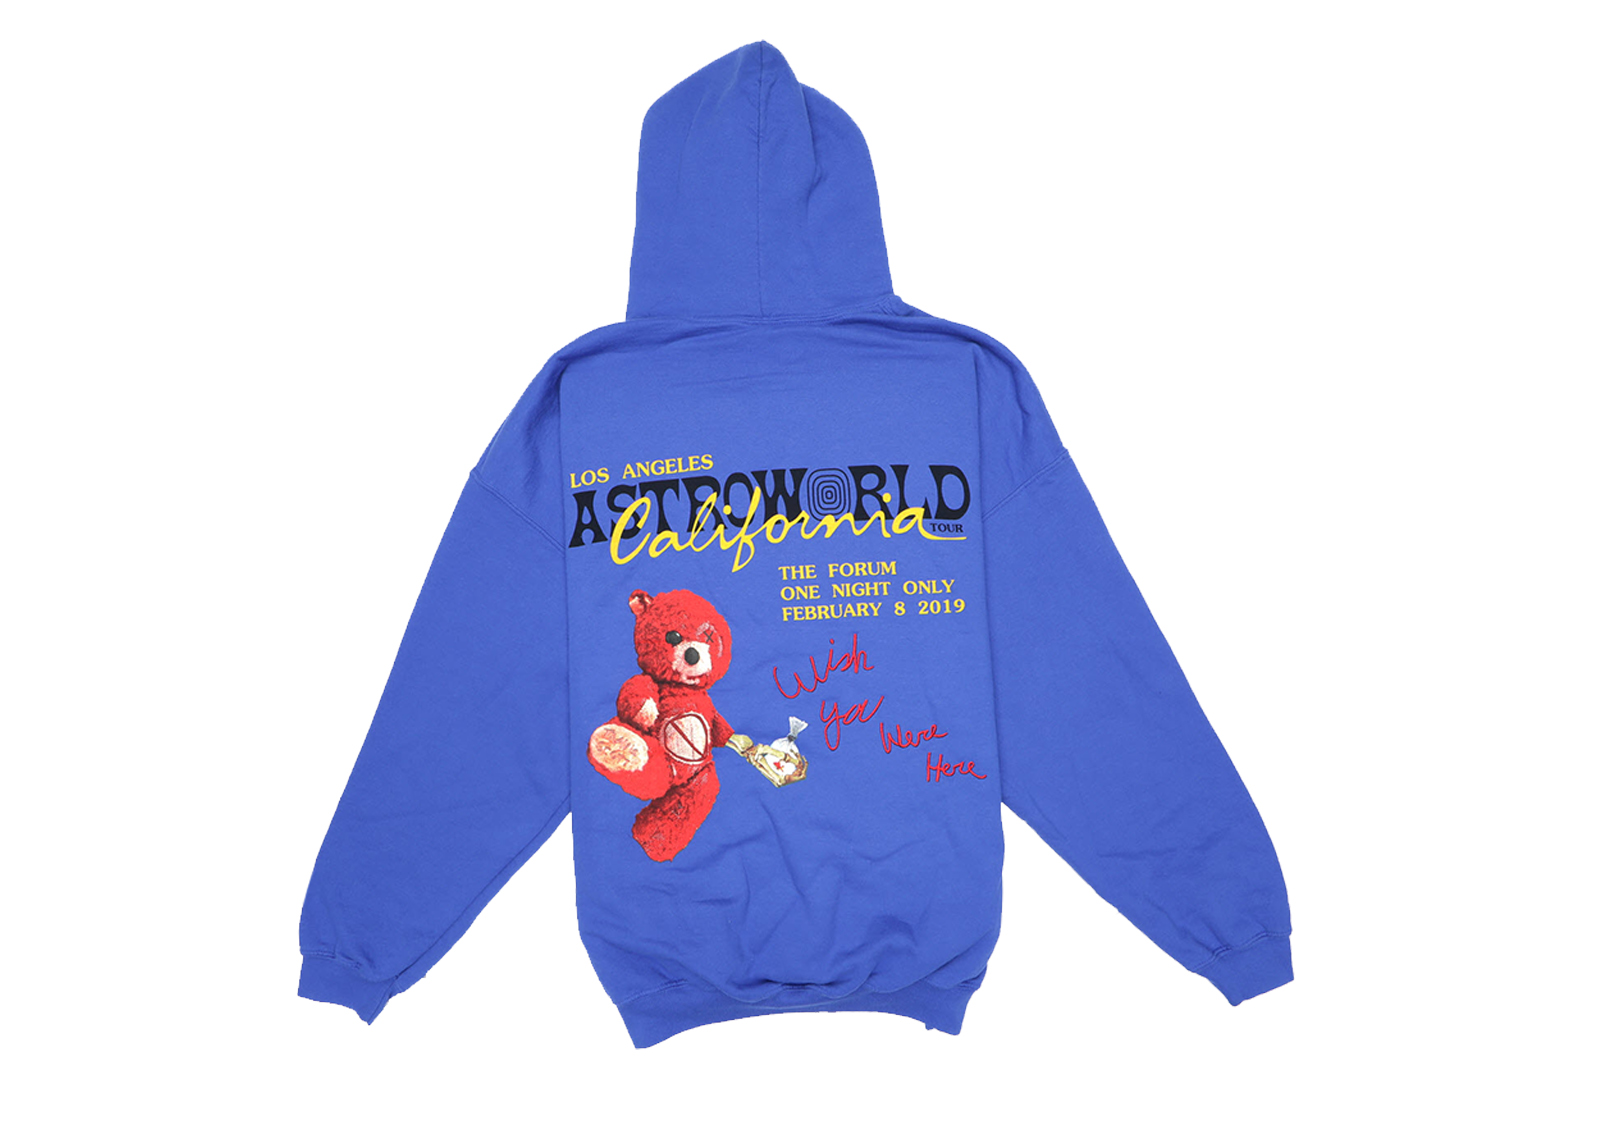 stockx astroworld hoodie